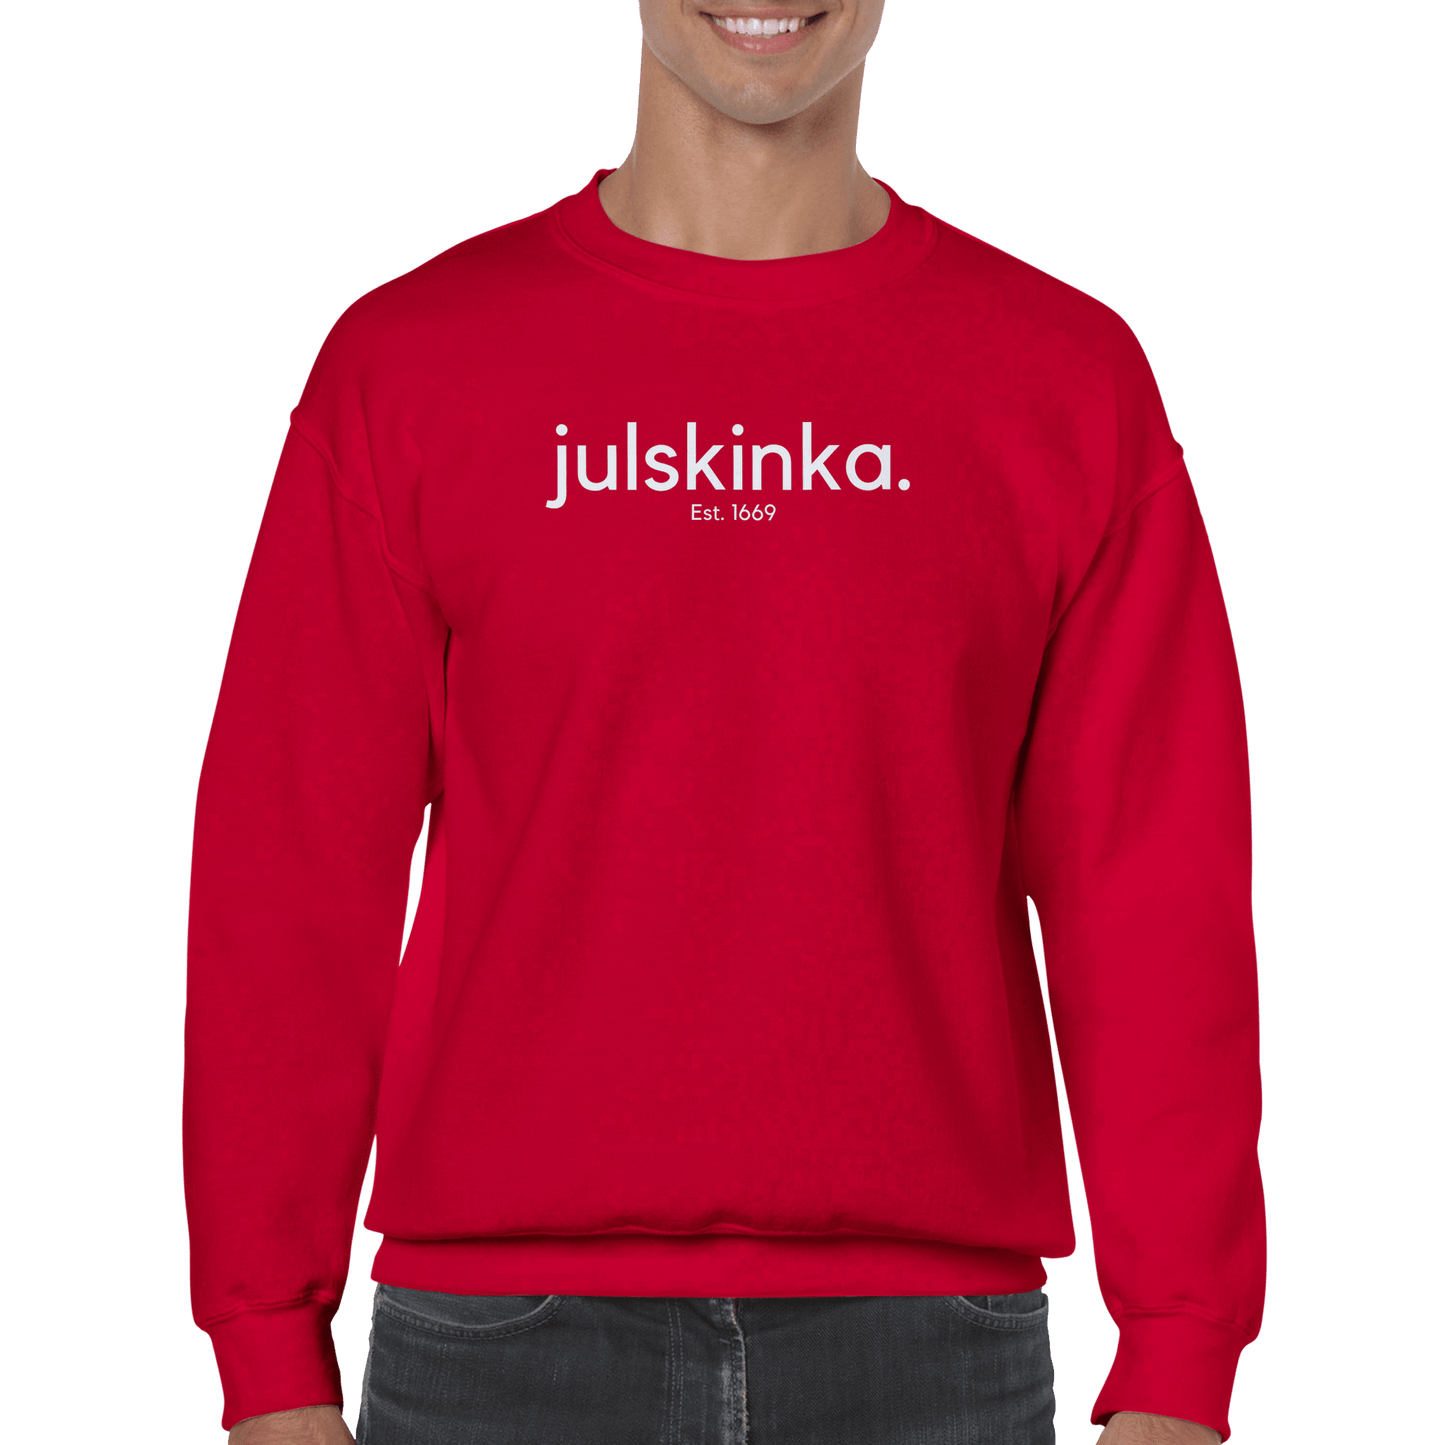 Julskinka - Sweatshirt 